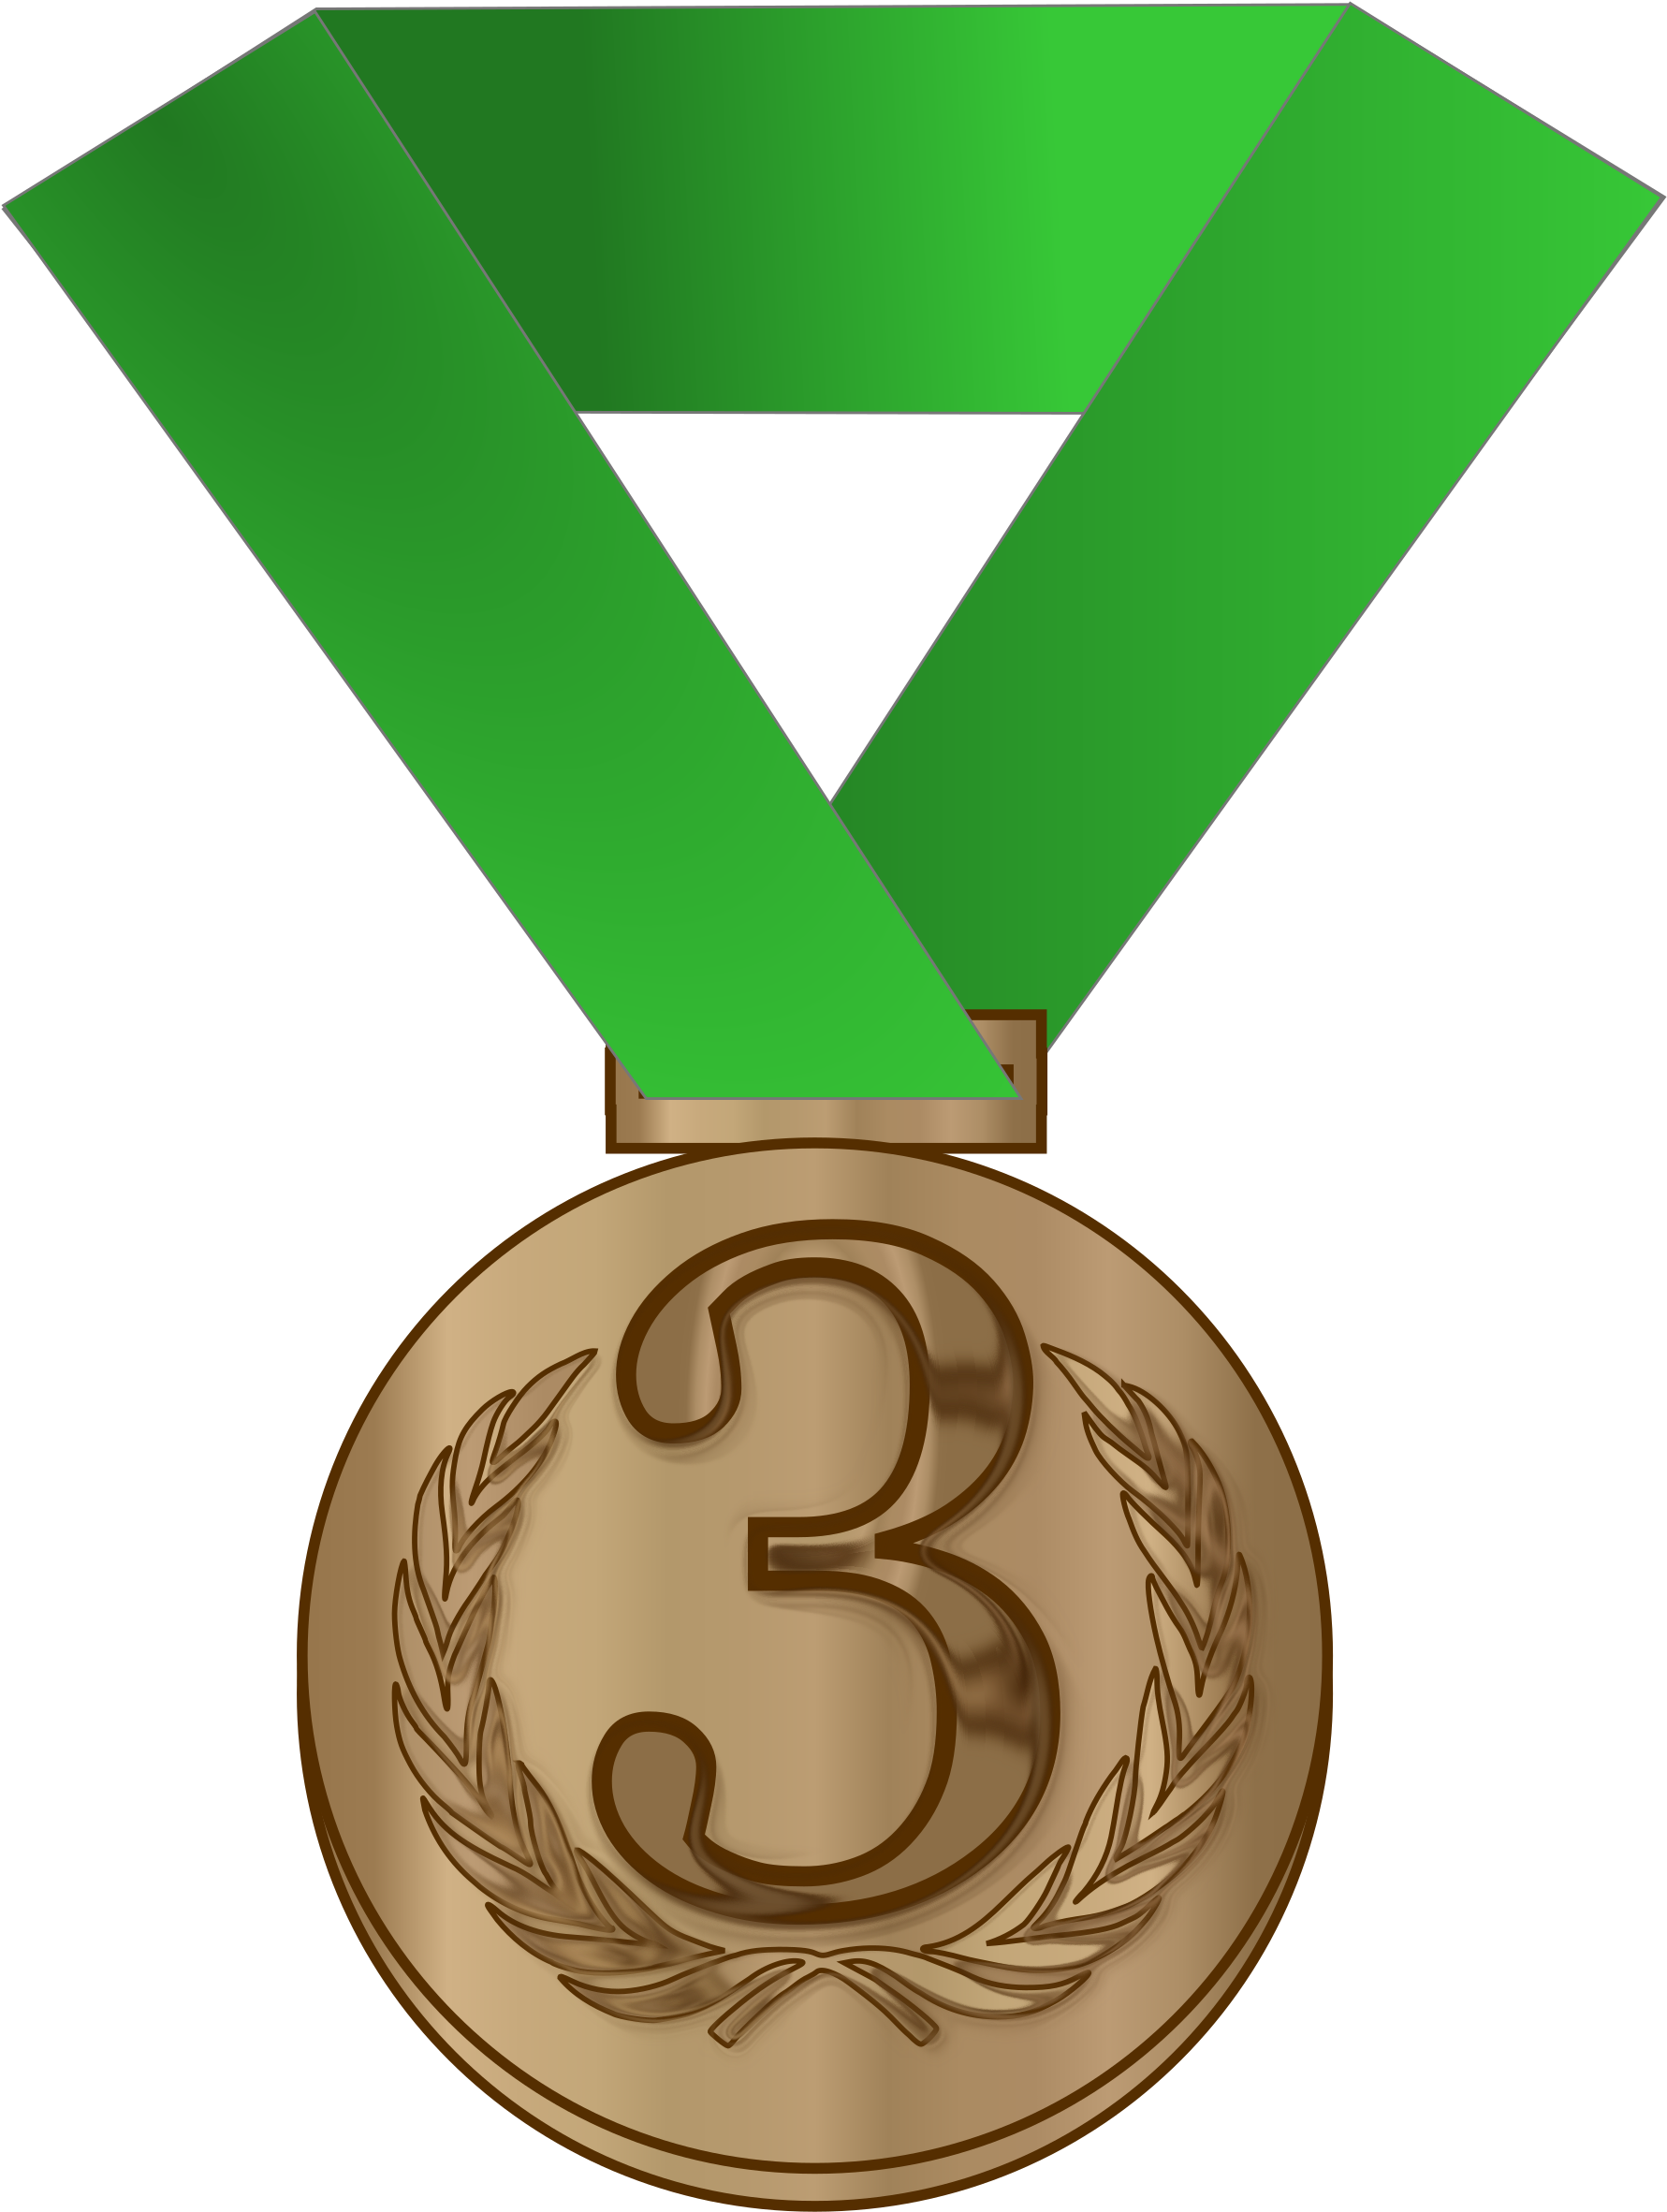 Medal download. Бронзовая медаль. Медаль "3 место ". Медаль на прозрачном фоне. Медали 1 2 3 место на прозрачном фоне.